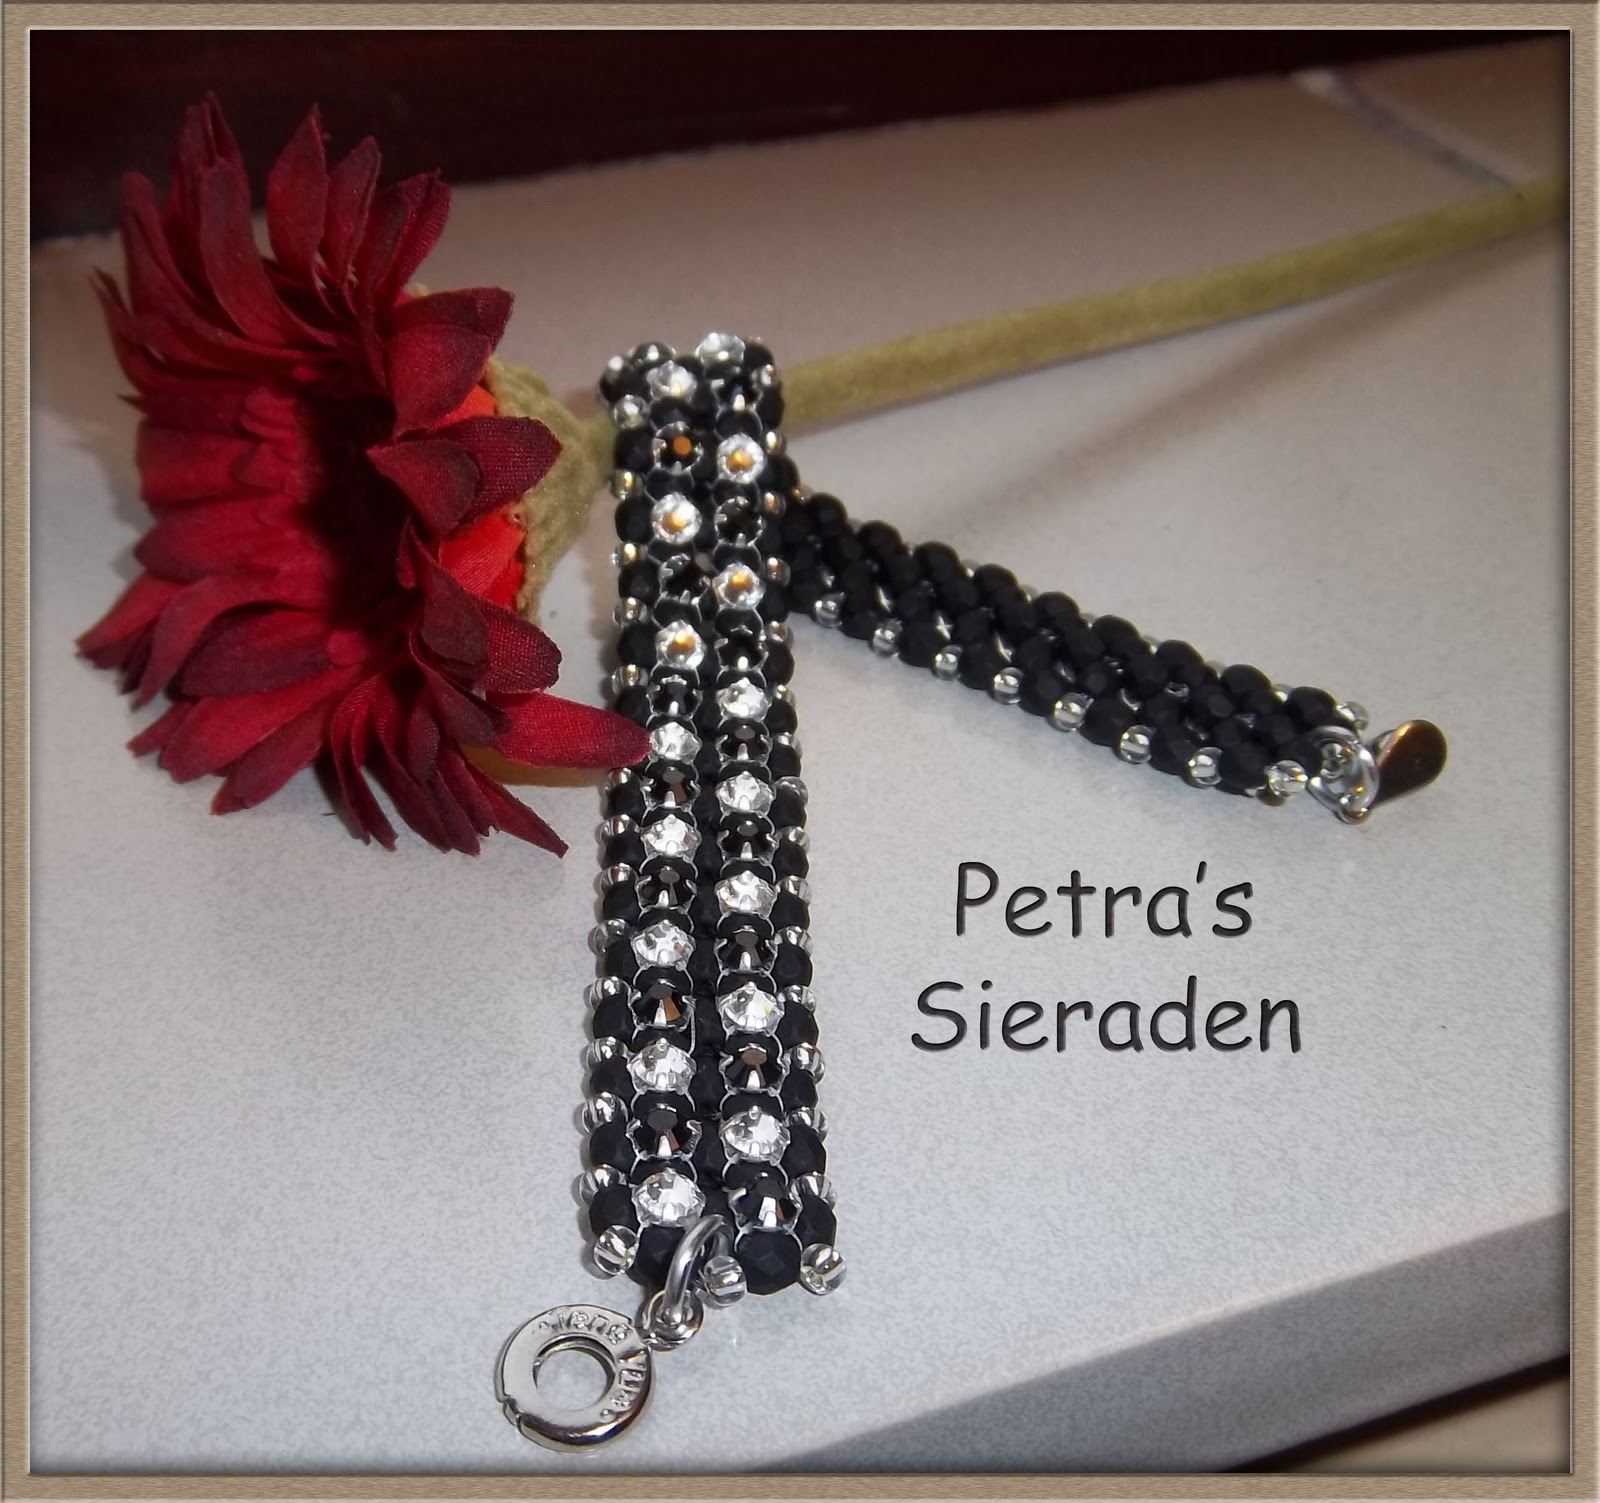 Petra's Sieraden: Black Crystal Rose Bracelet